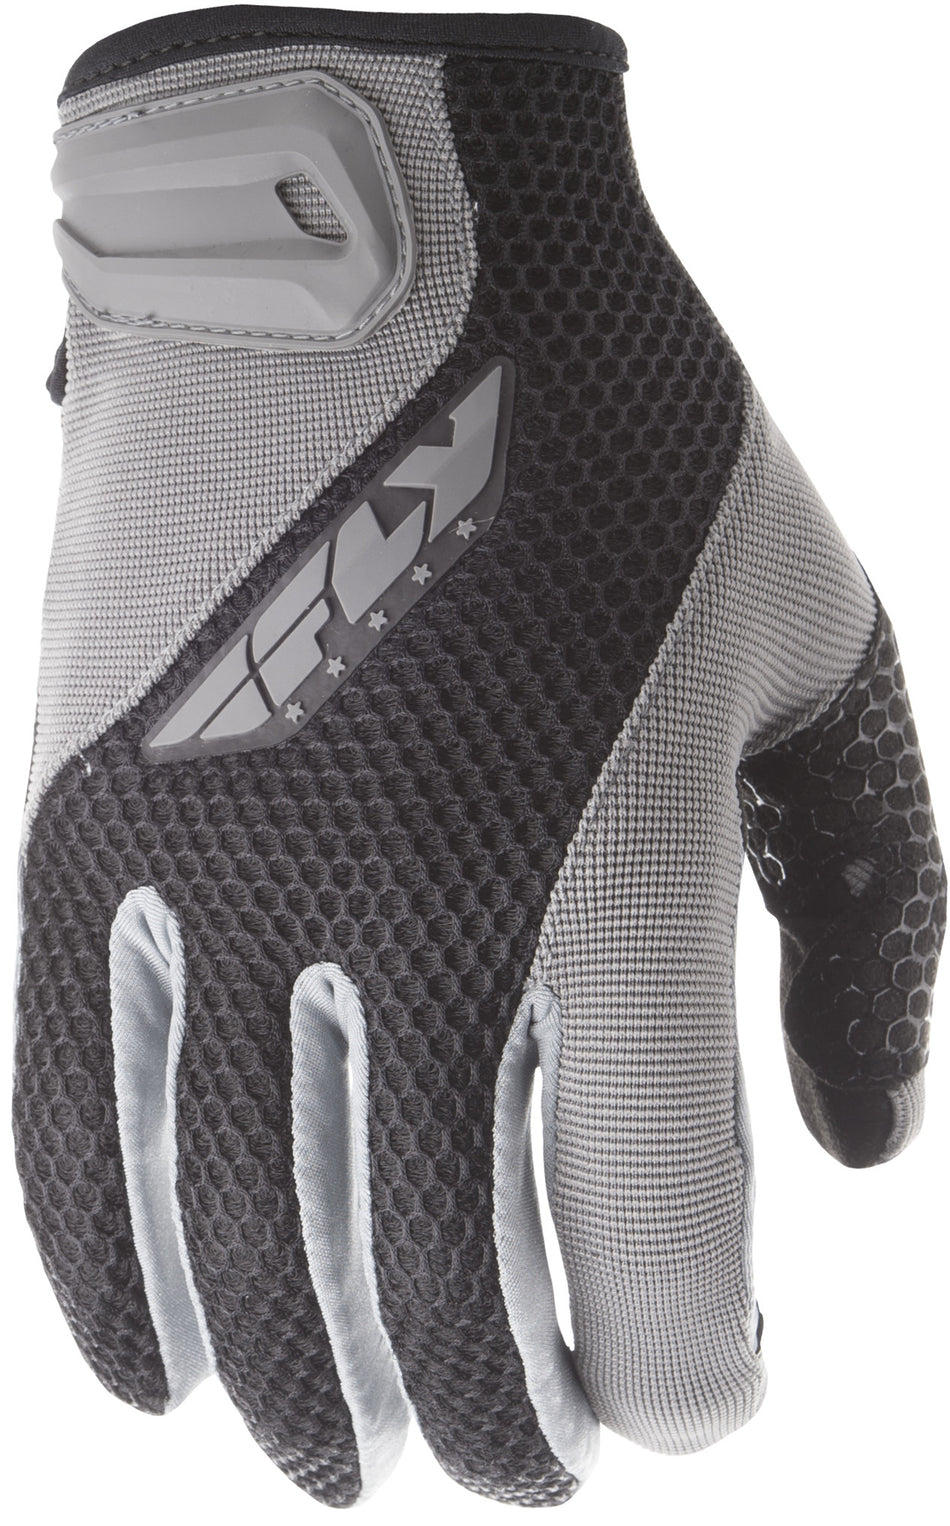 FLY RACING Coolpro Gloves Gunmetal/Black Xl #5884 476-4023~5